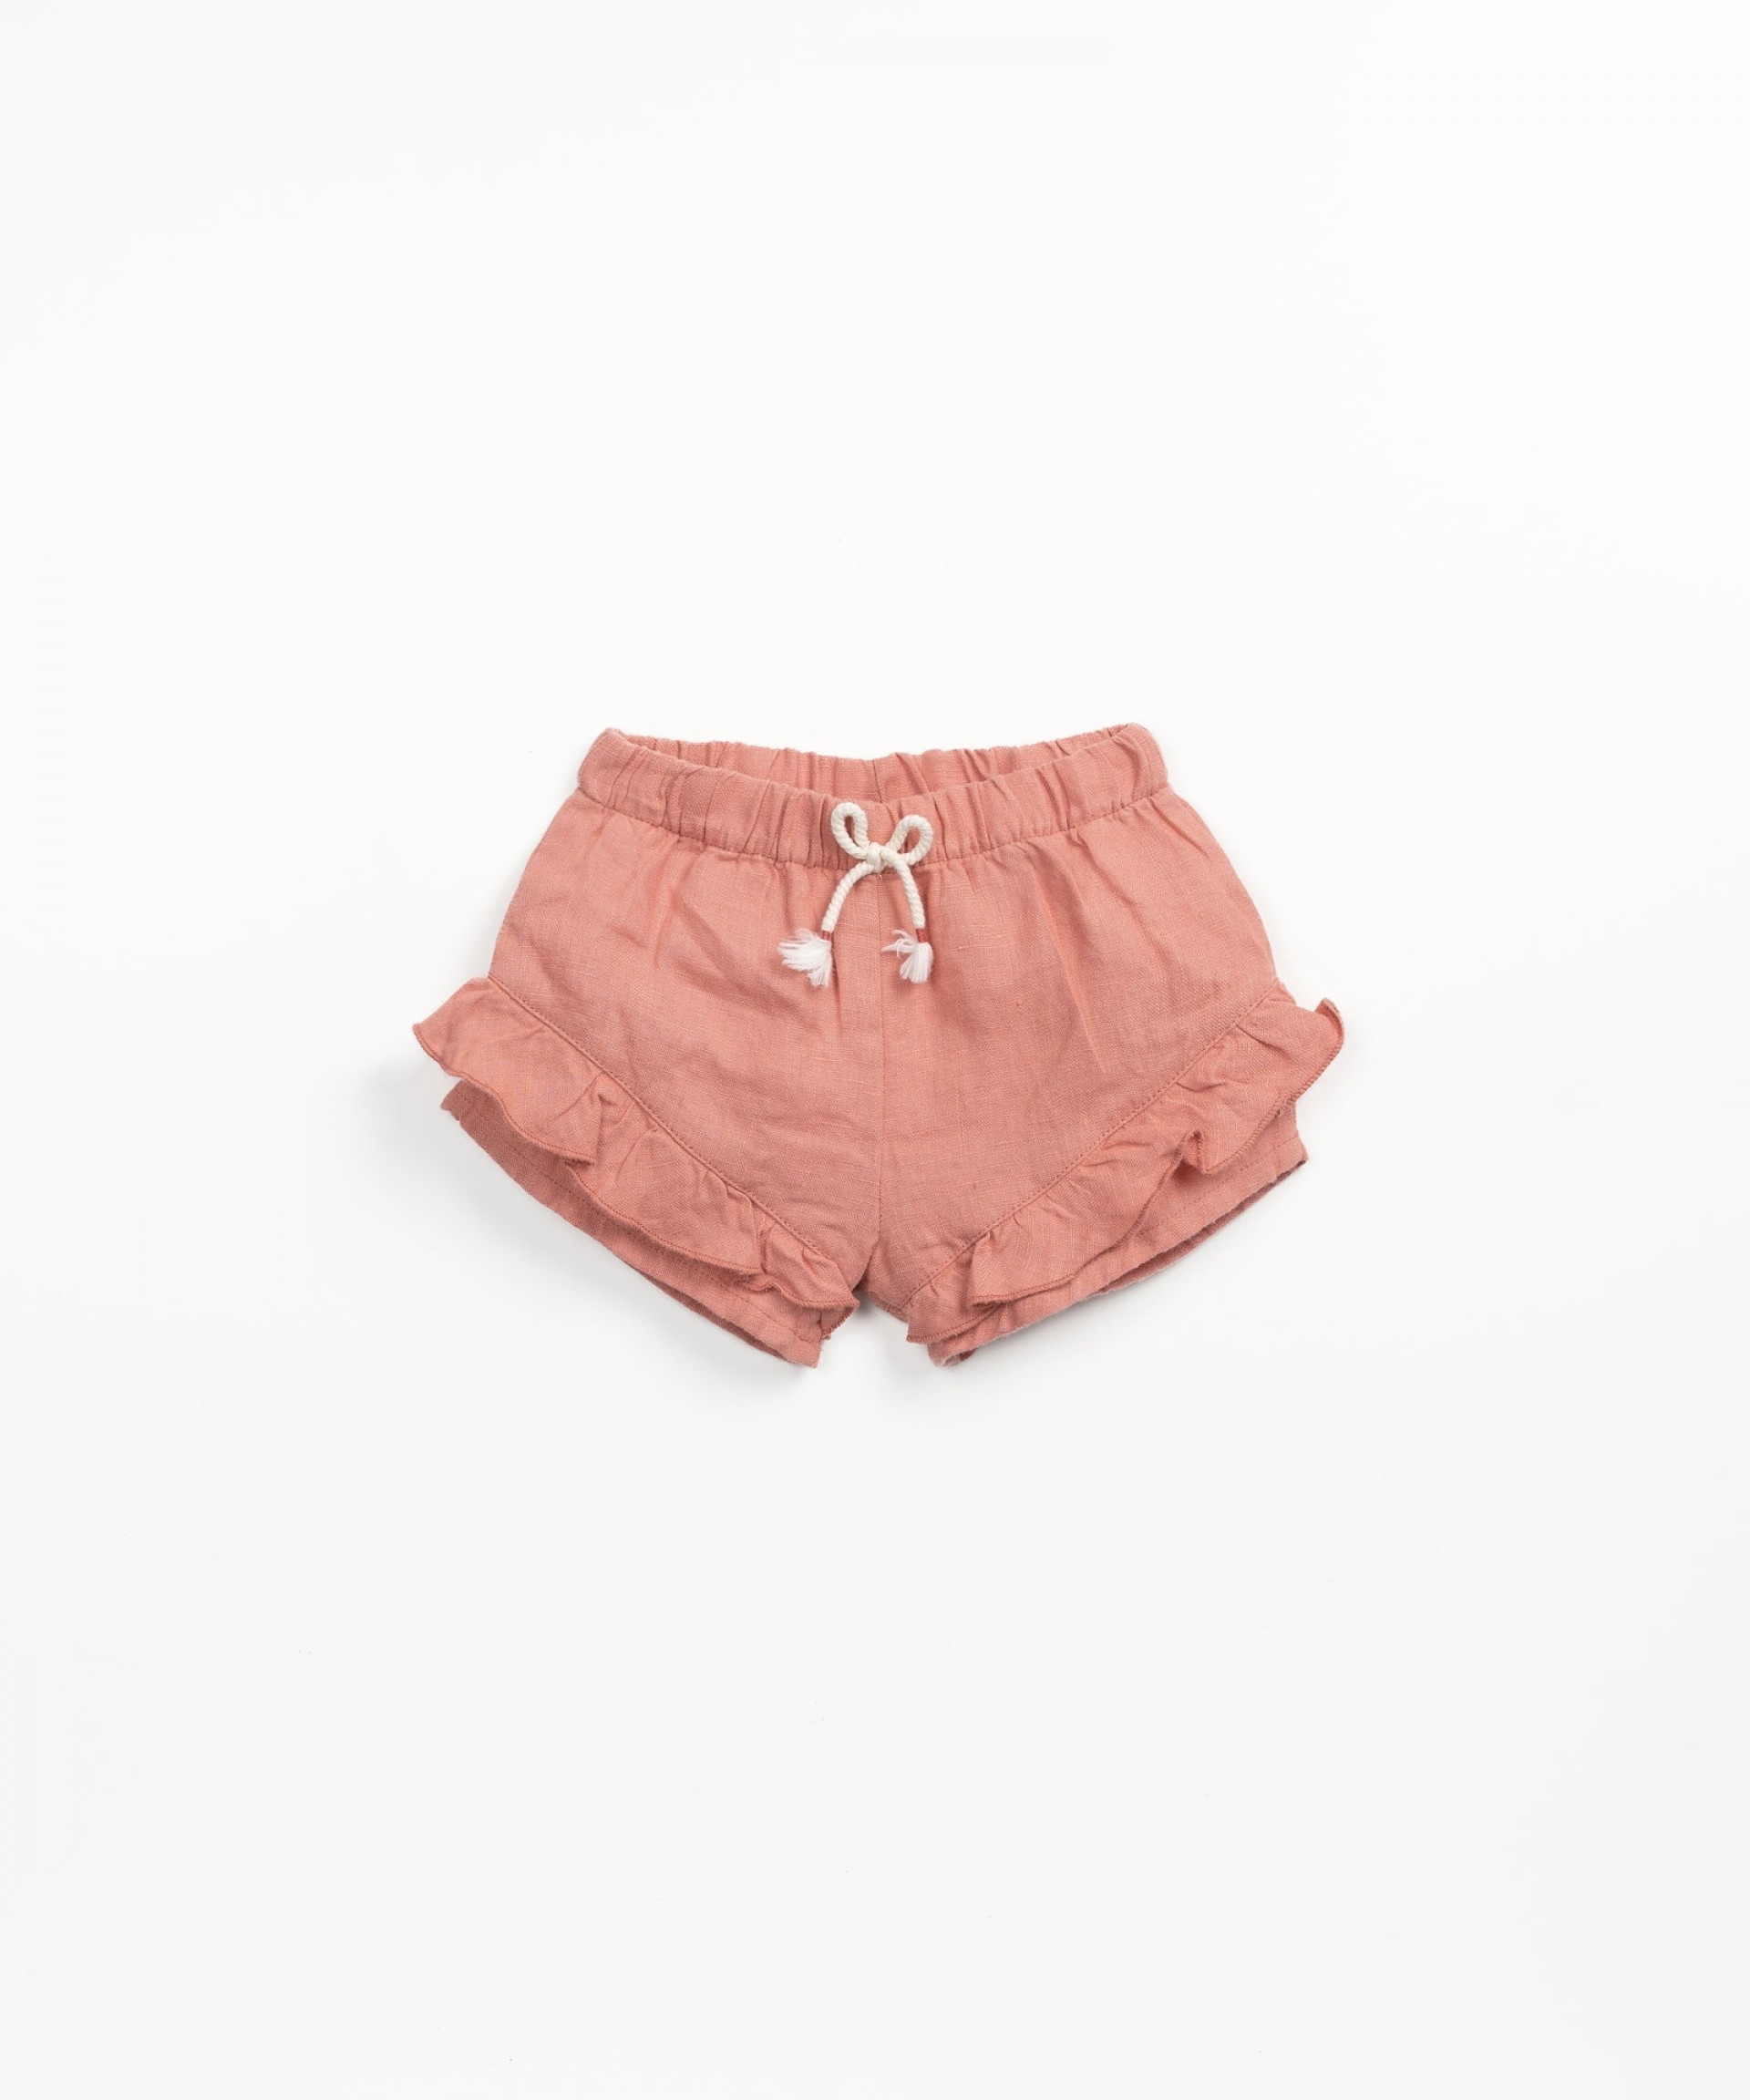 Pantaln corto de lino con cintura elstica | Textile Art